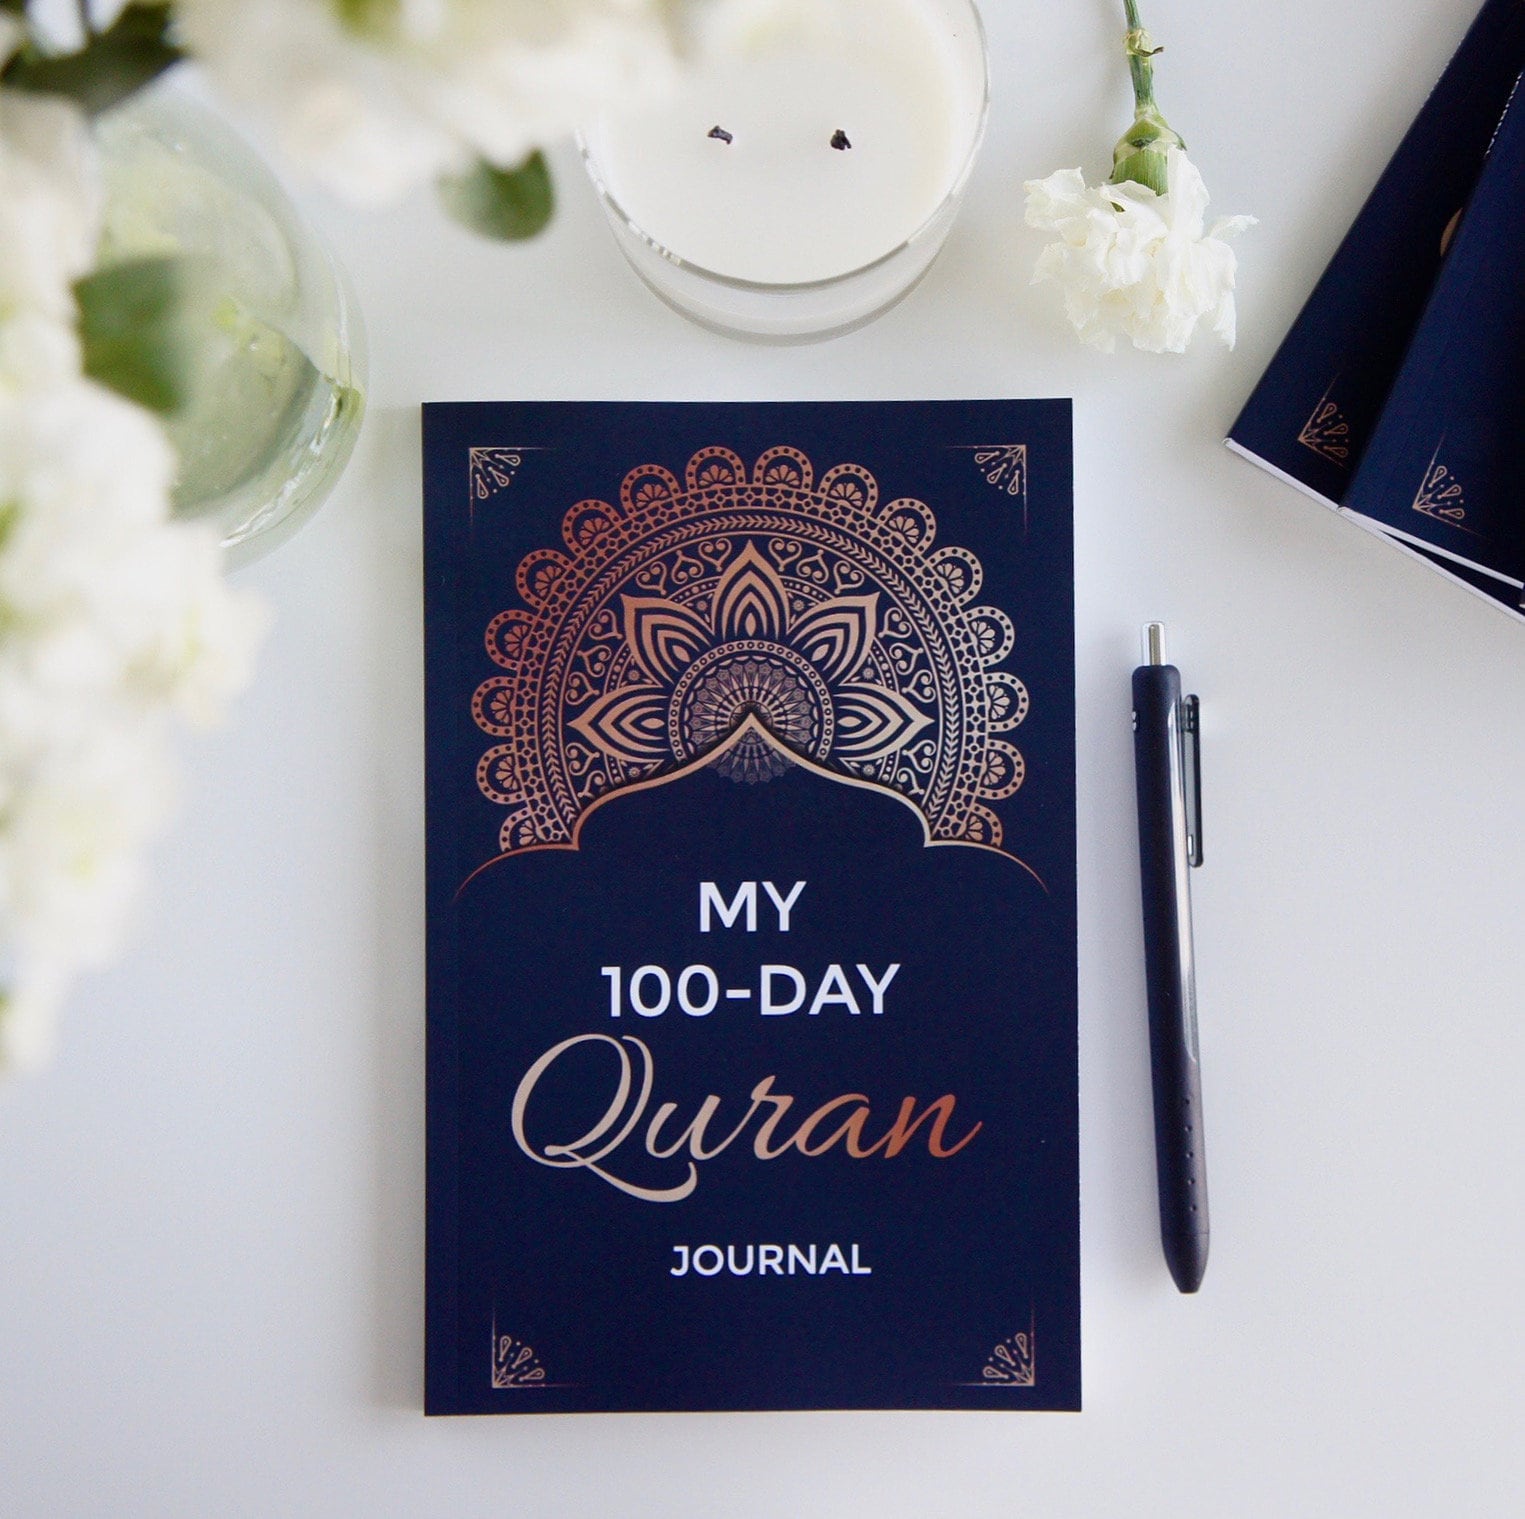 My 100-Day Quran Journal